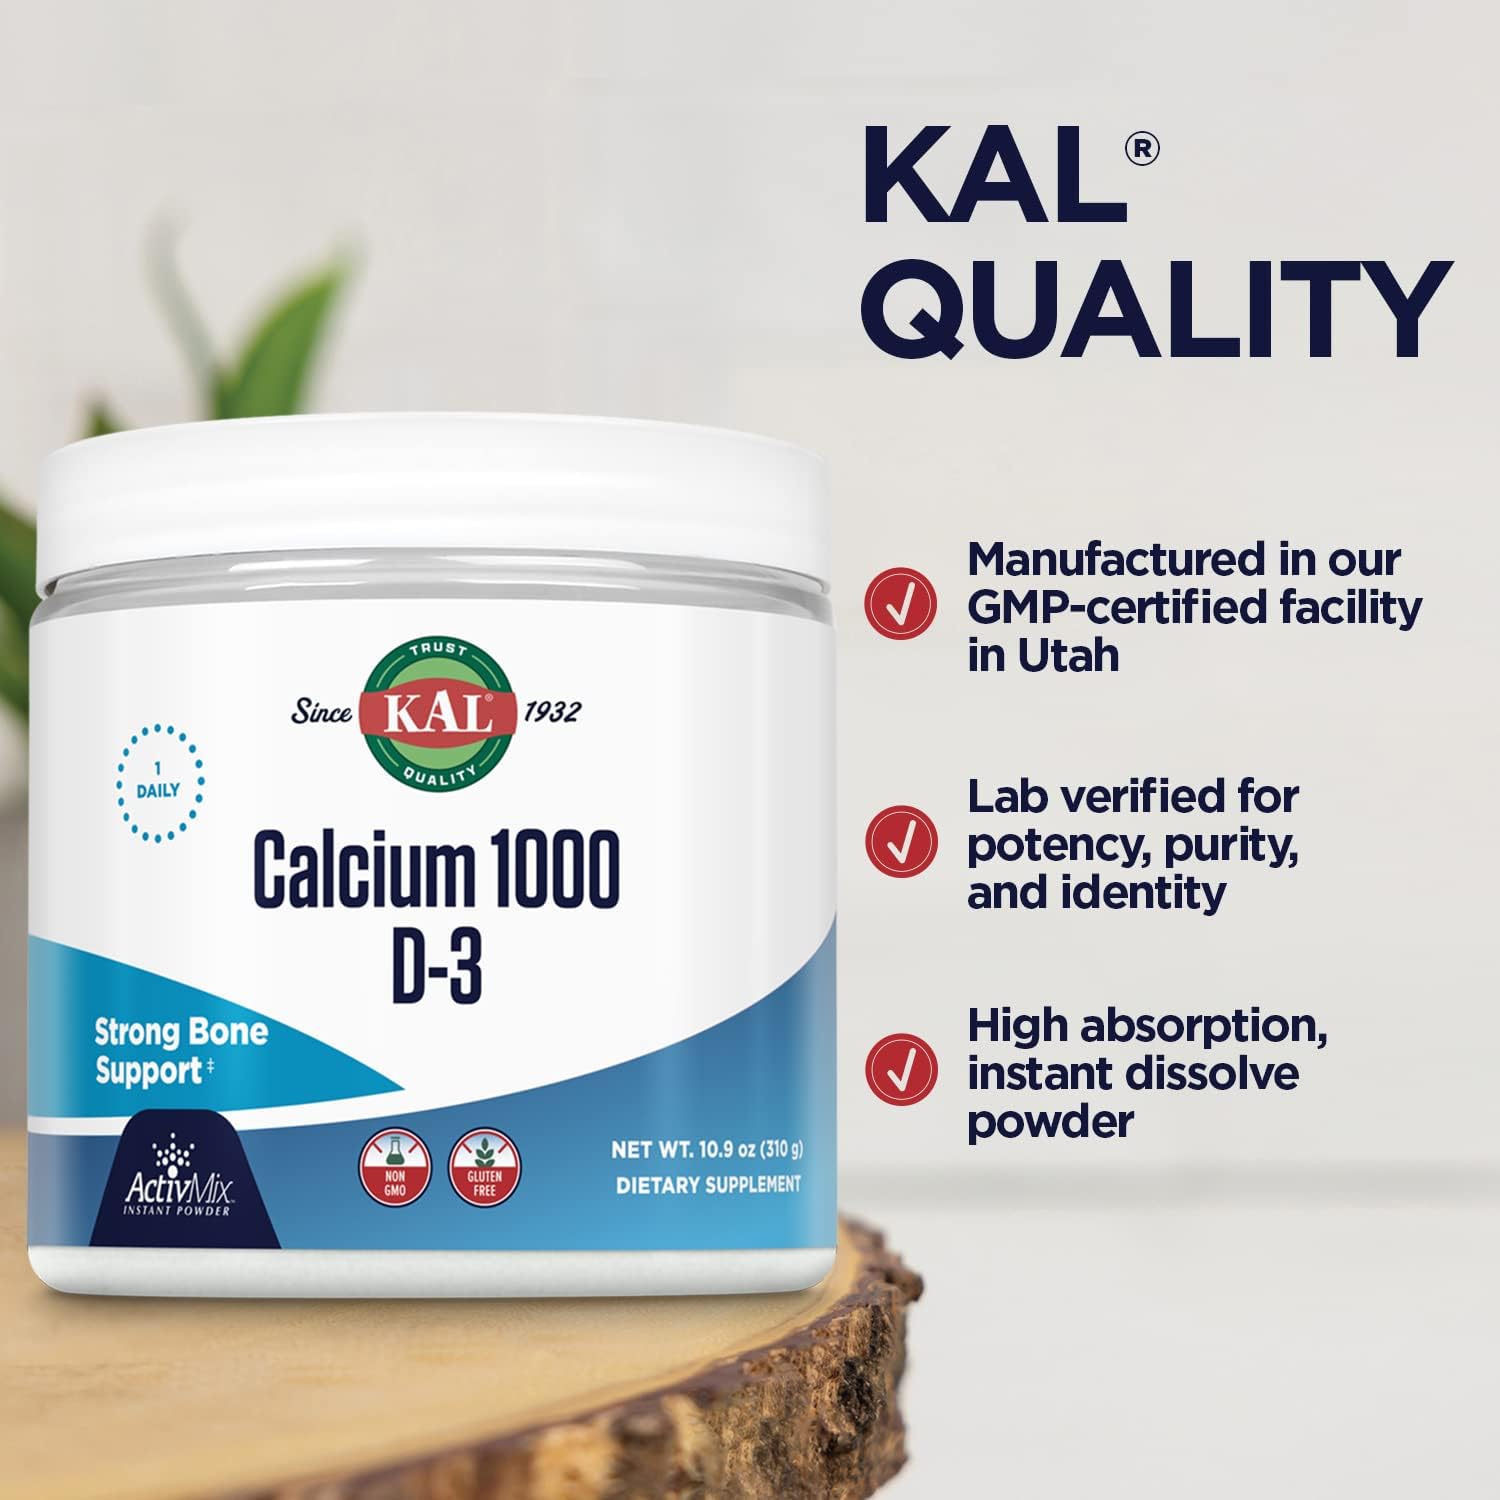 KAL Calcium Vitamin D-3 ActivMix, Powder Calcium Supplement, Bioavaila